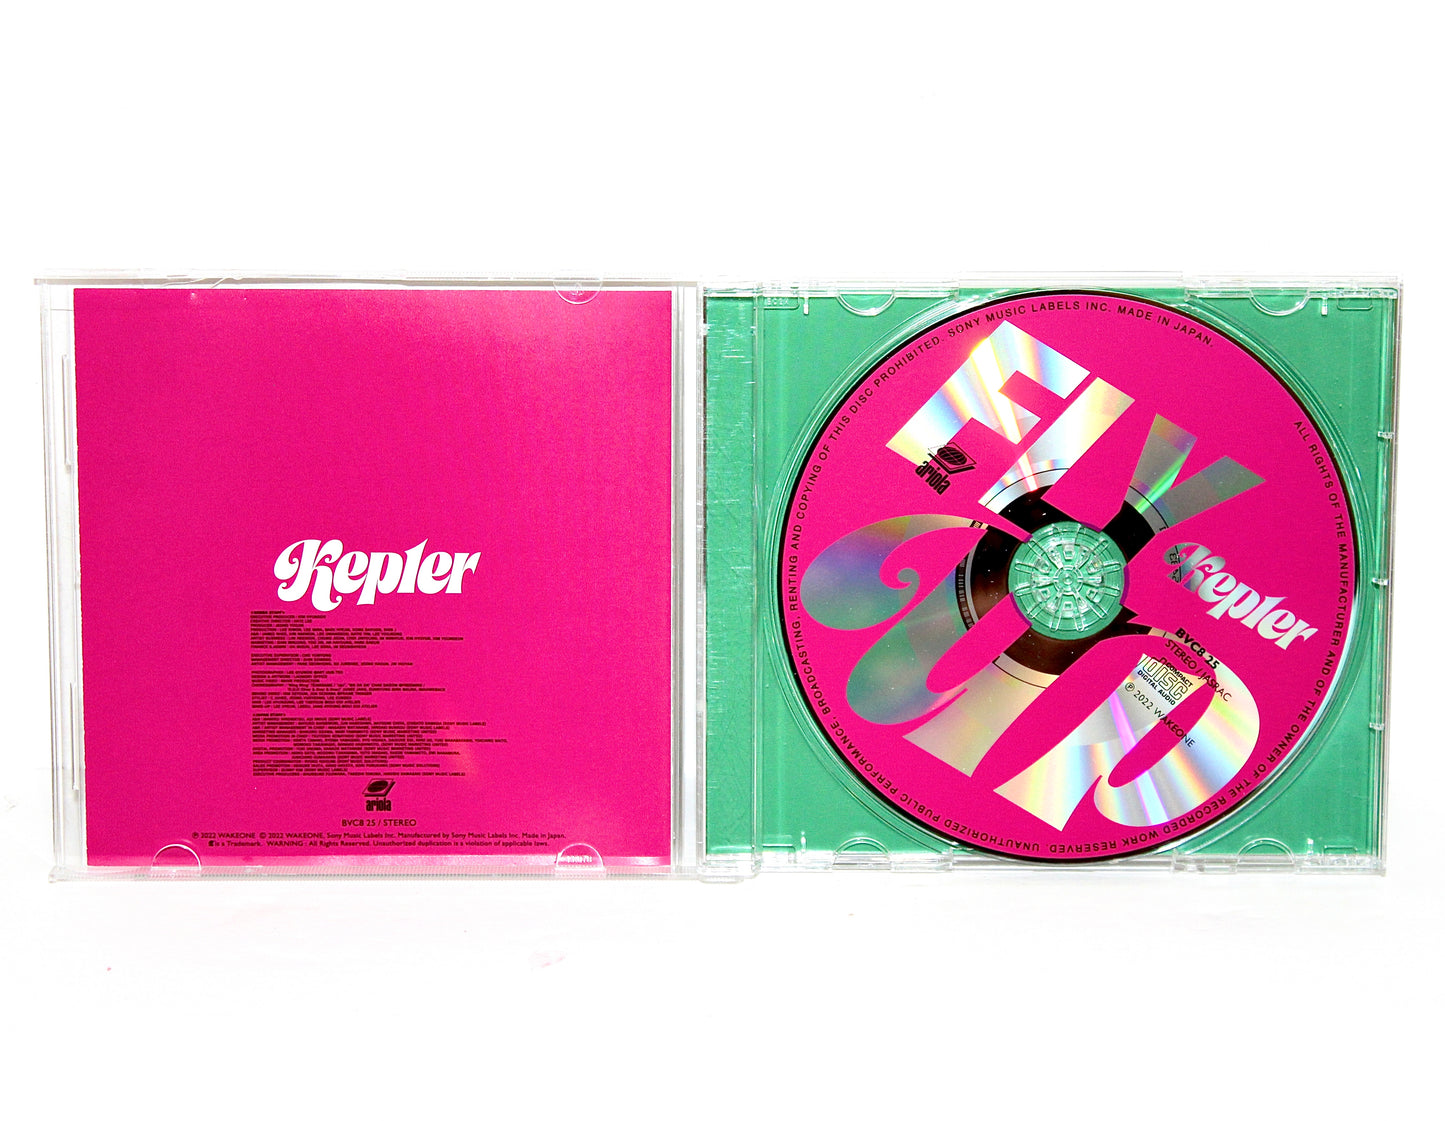 KEP1ER 1st Japanese Single Album: Fly-Up | Kep1ian Limited Edition